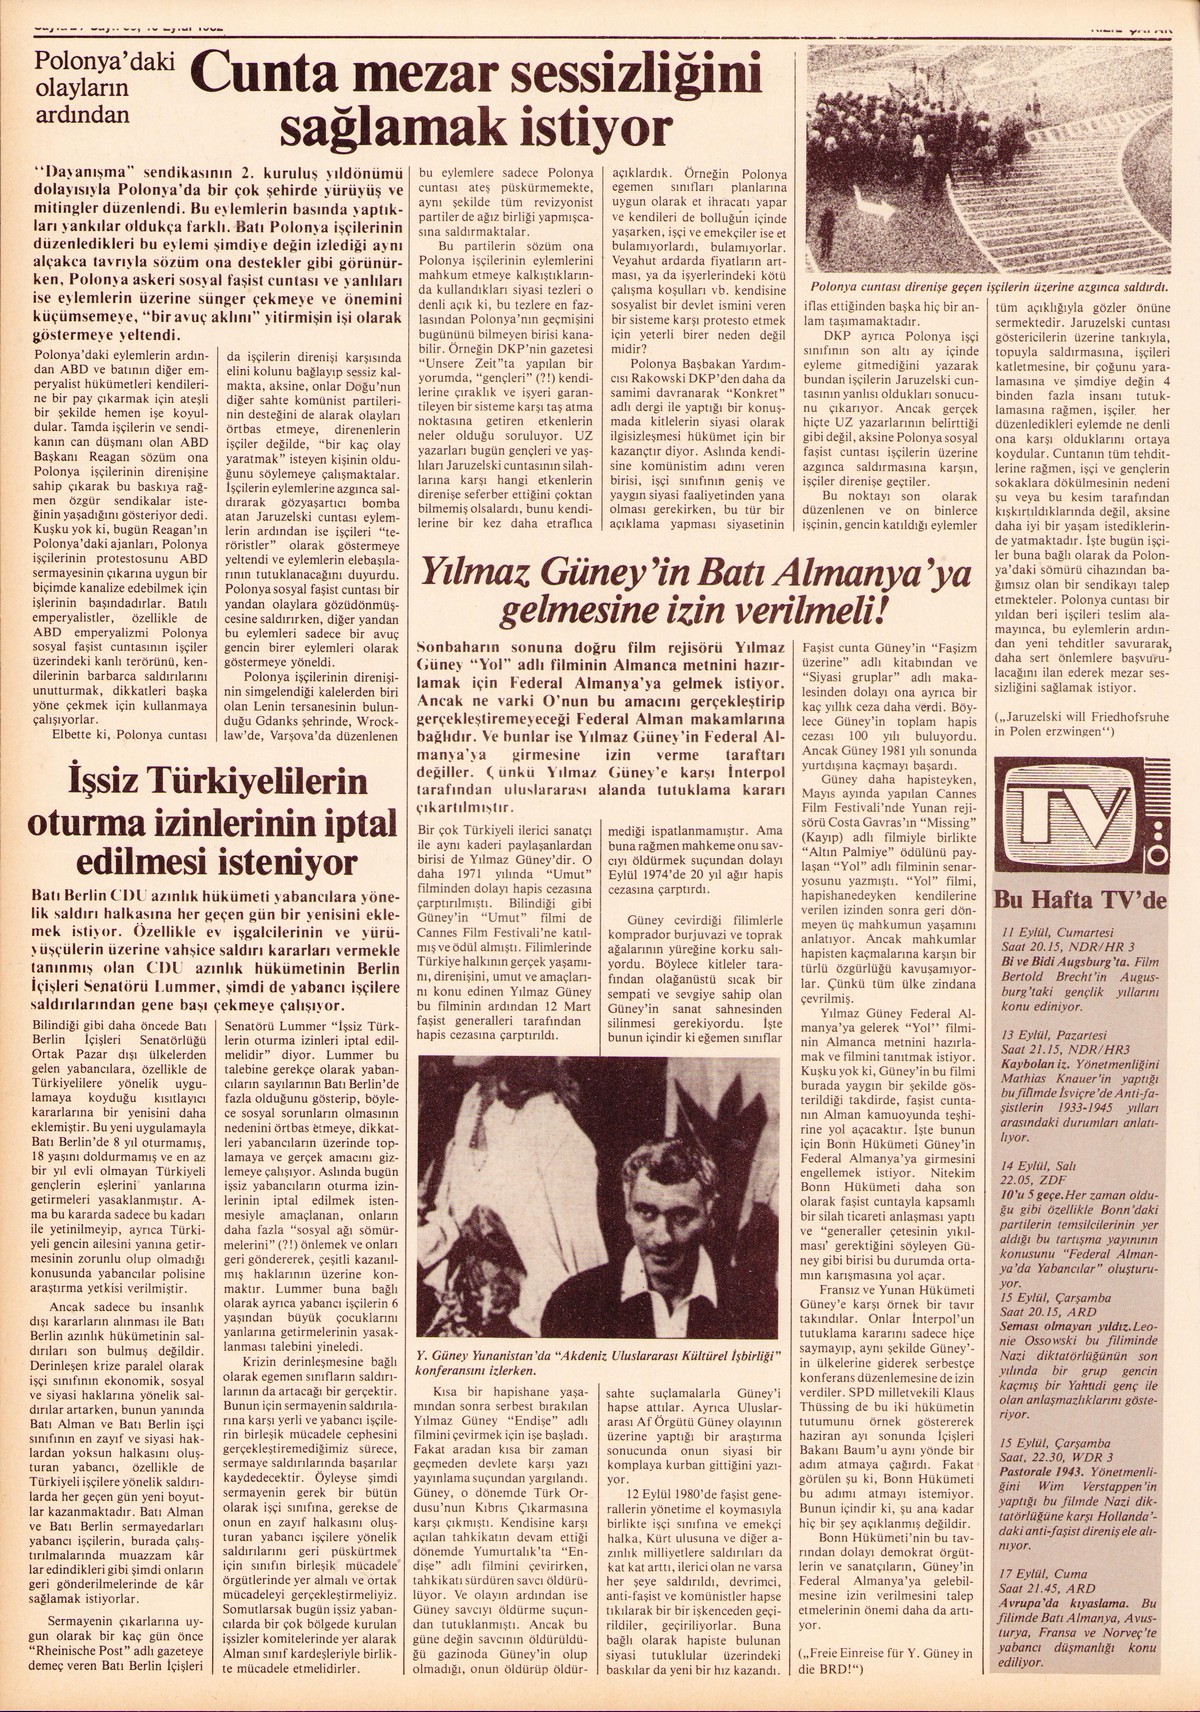 Roter Morgen, 16. Jg., 10. September 1982, Nr. 36, Seite 15